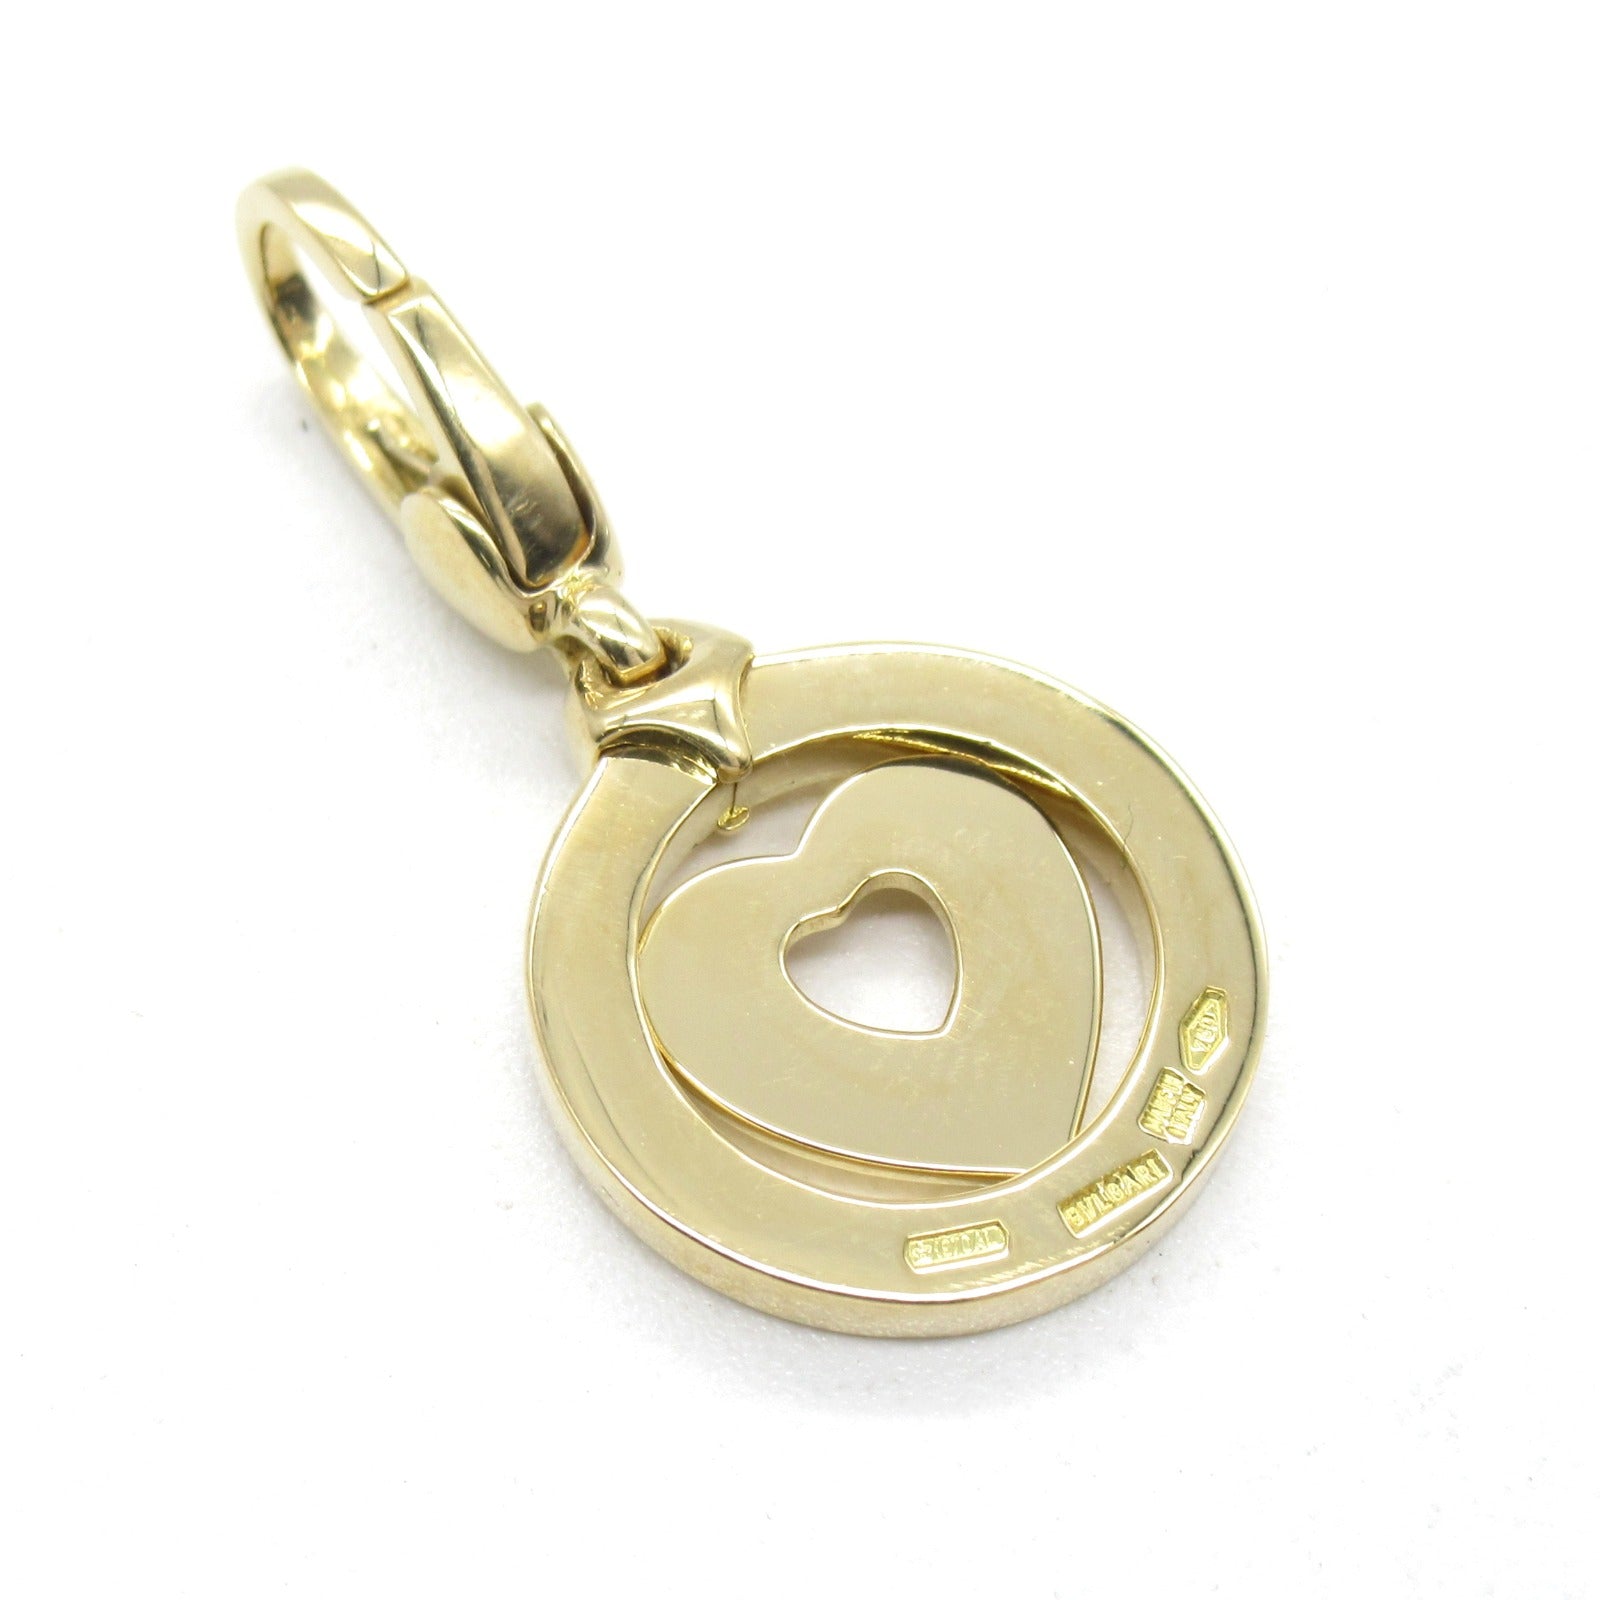 Bulgari BVLGARI Tondheart Charm Pendant Top Jewelry K18 (Yellow G)  Gold